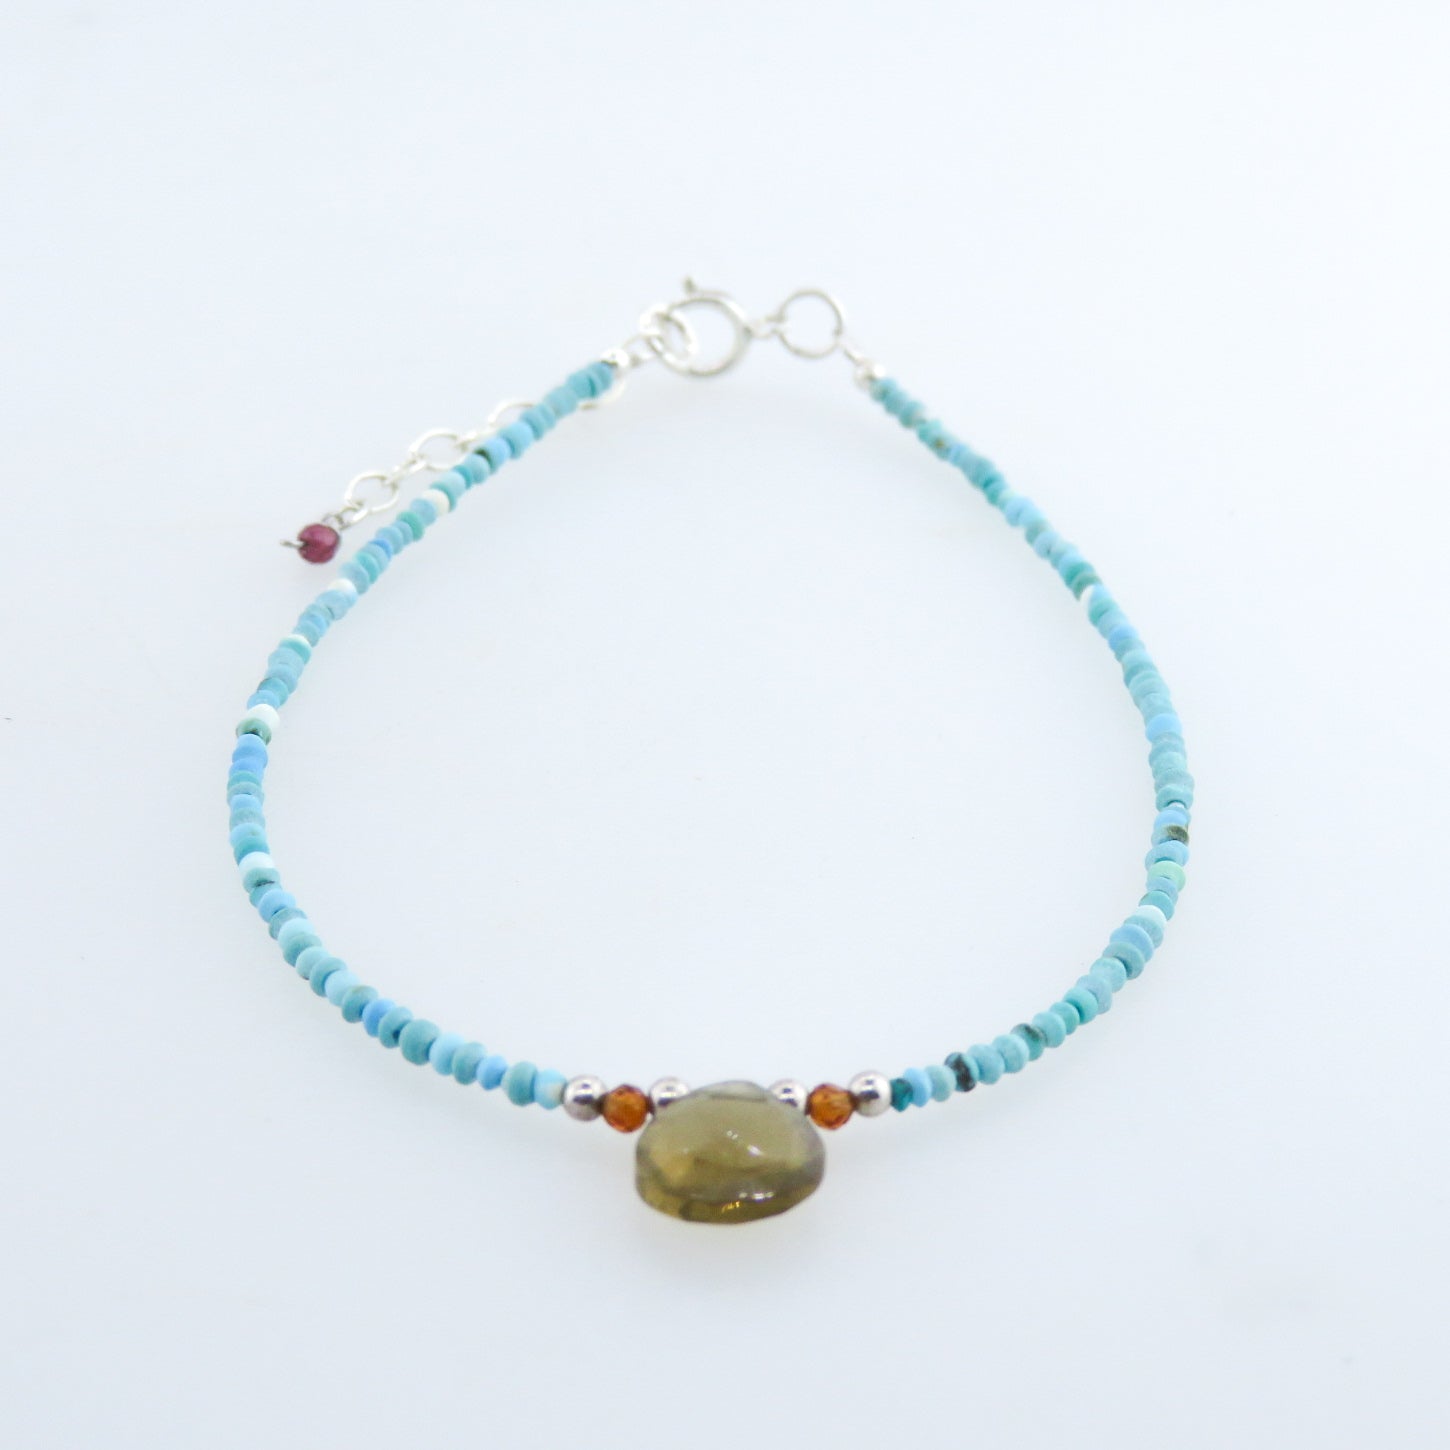 Turquoise Bracelet with Smokey Quartz, Garnet and Silver Beads